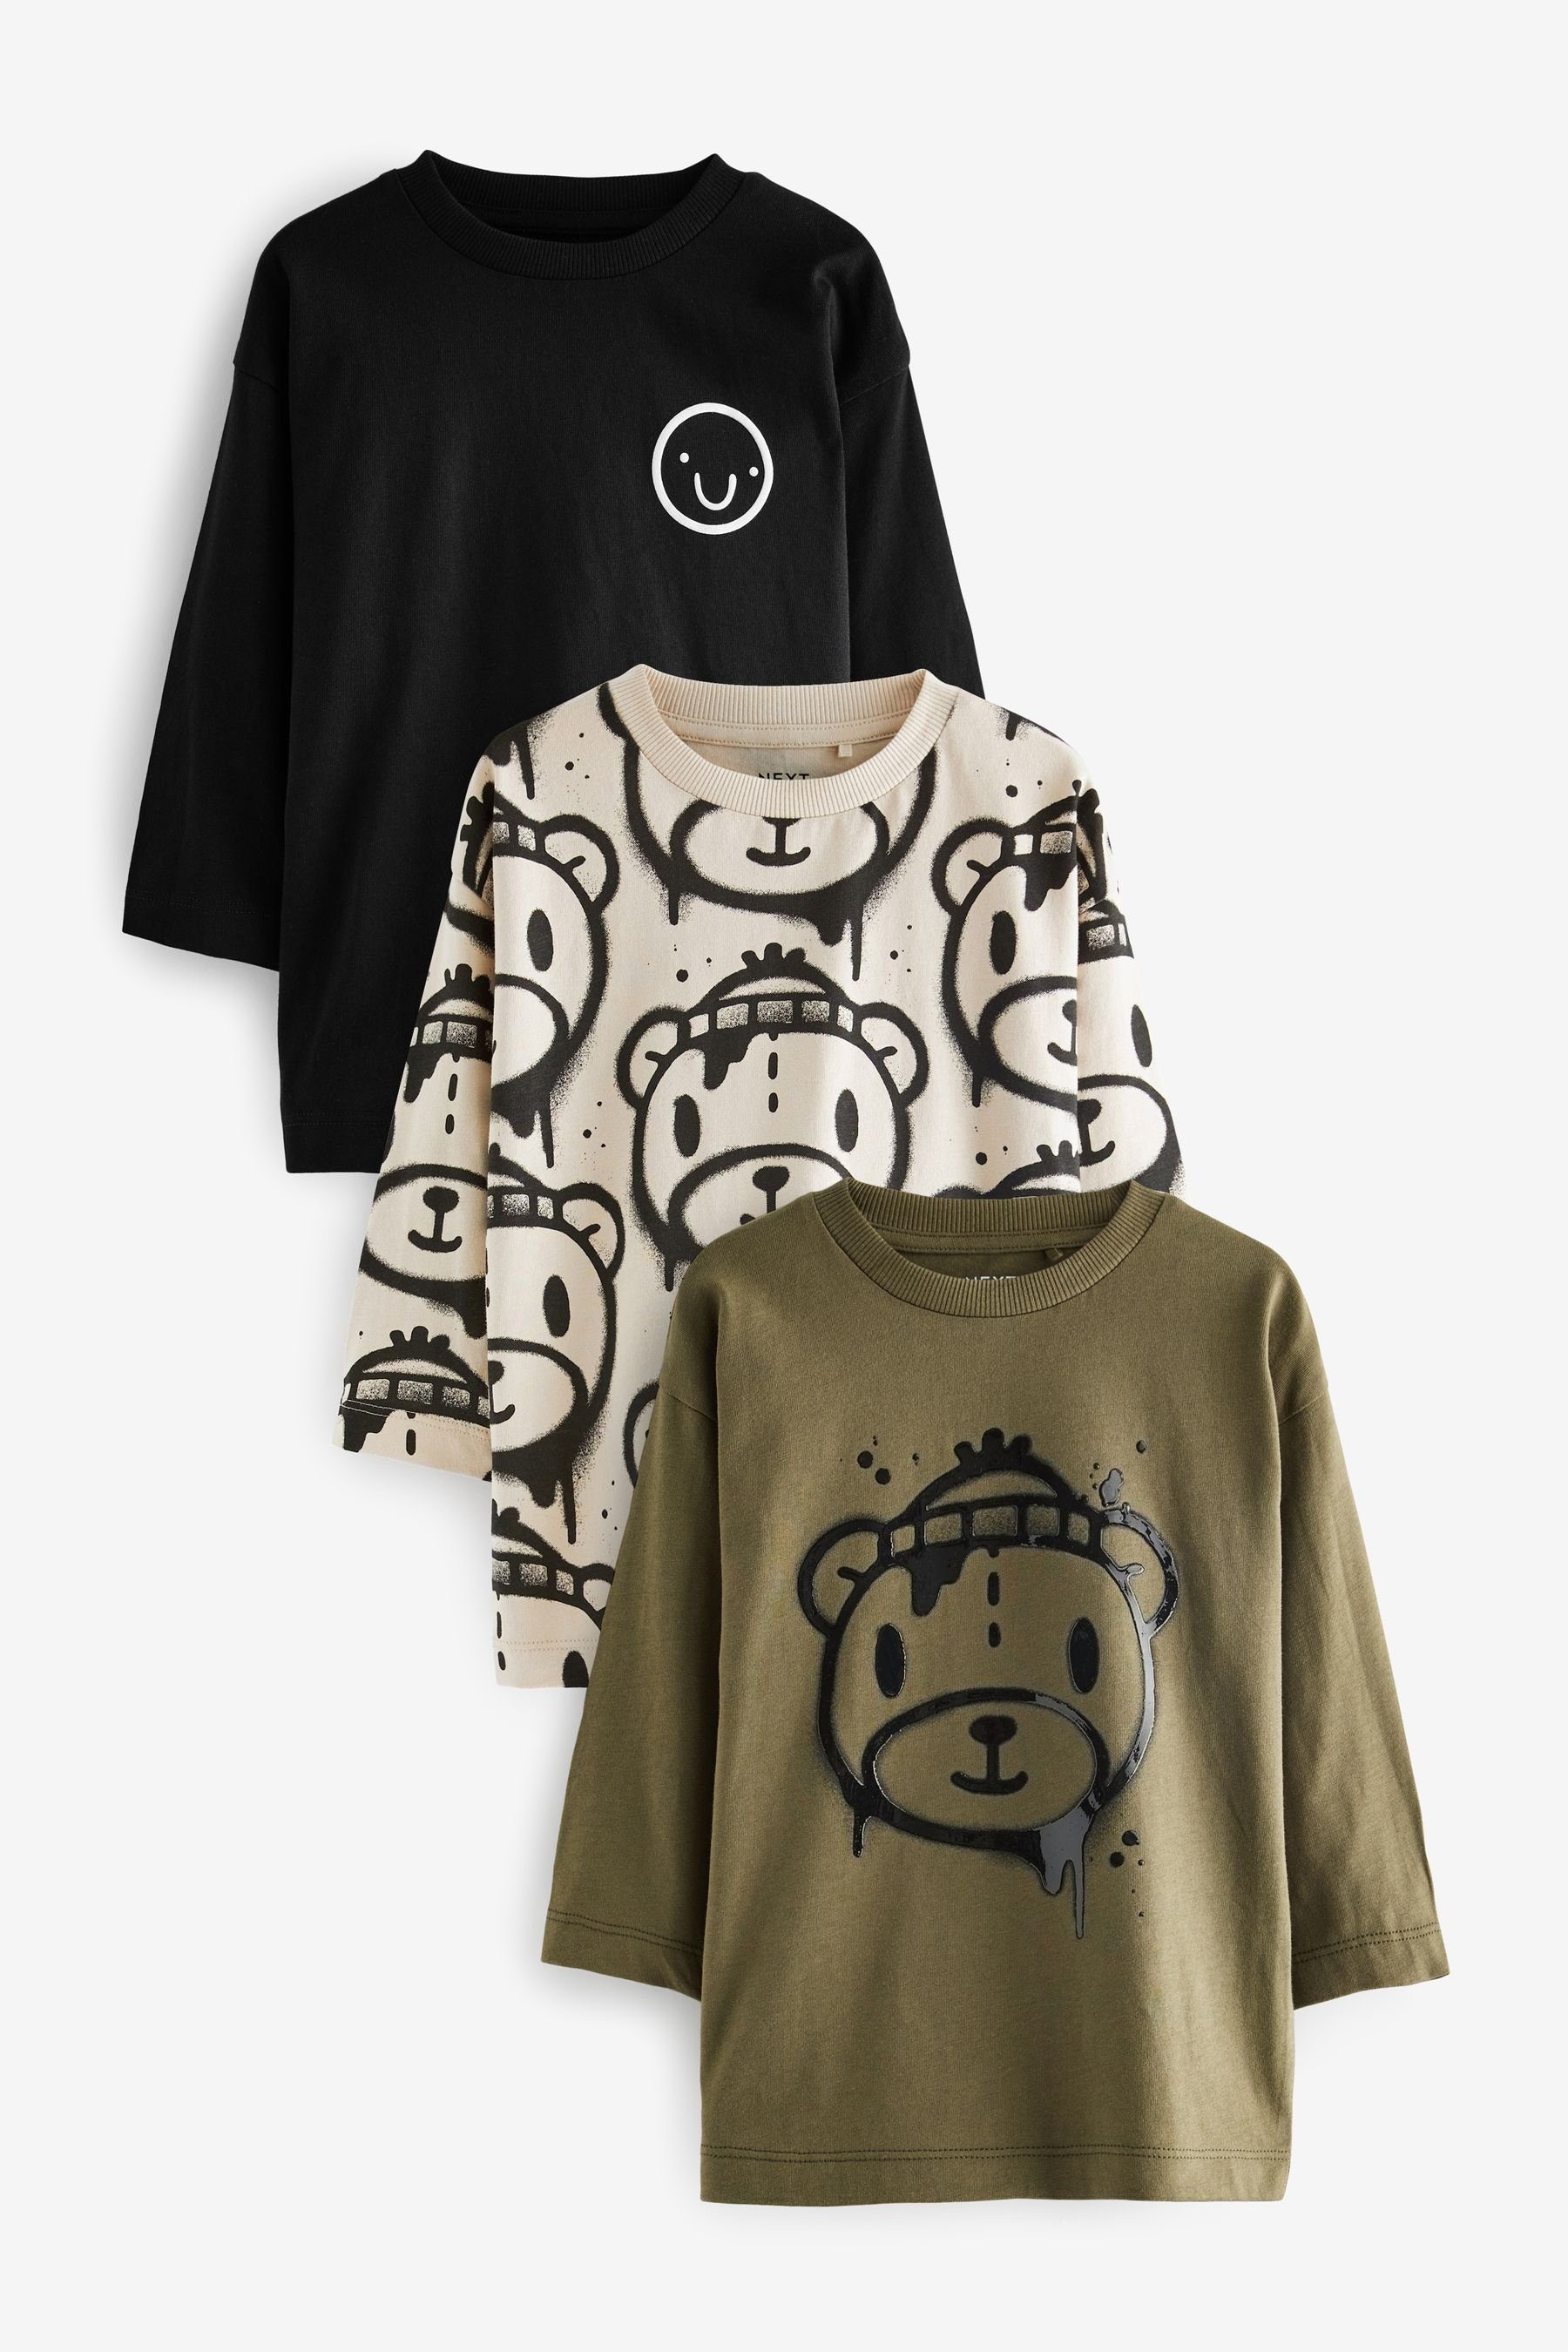 Next Langarmshirt Langärmelige Shirts mit Figurenmotiv im 3er-Pack (3-tlg) Khaki/Stone Bear